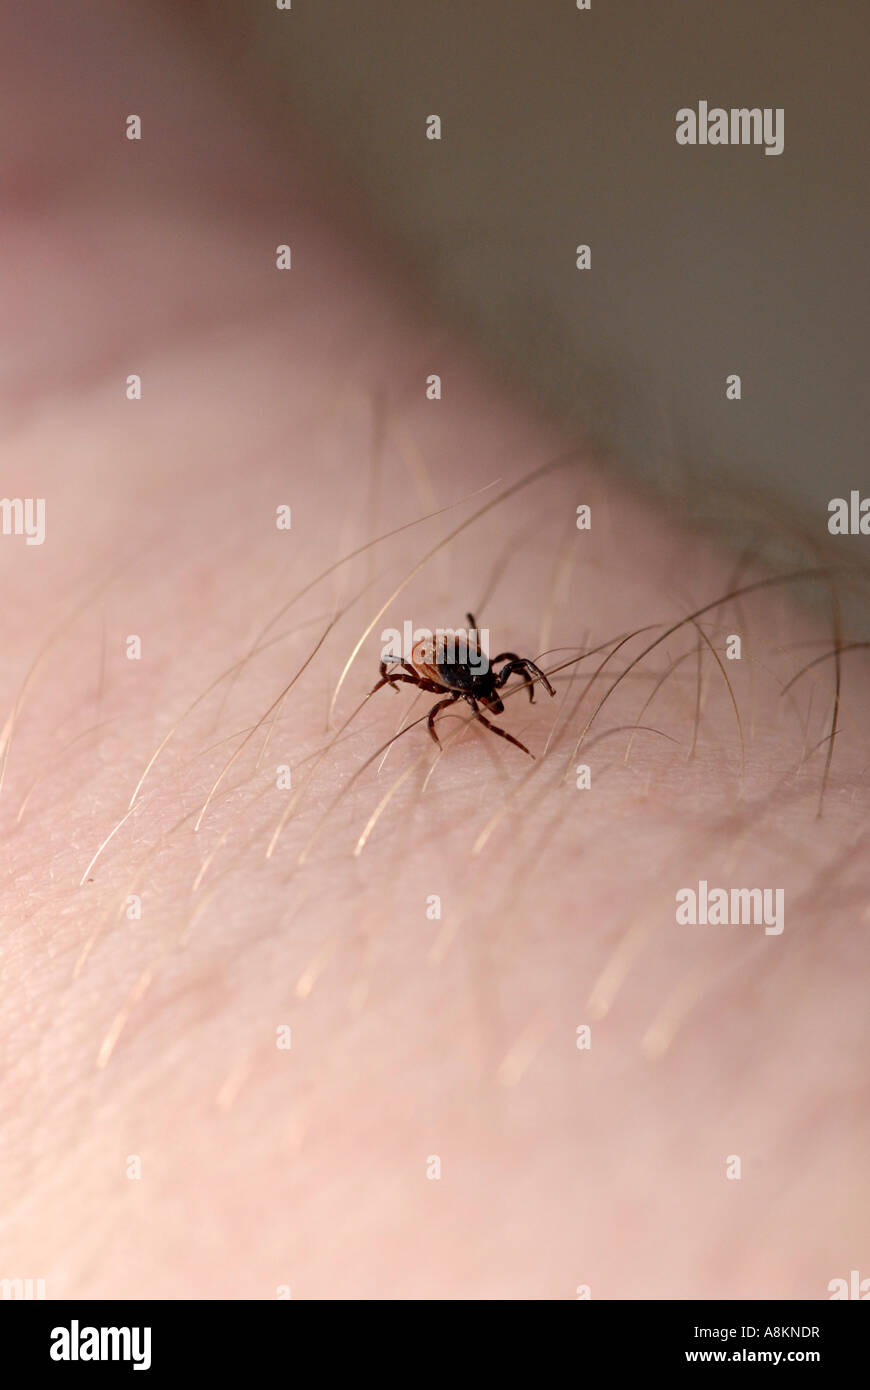 Tick (Ixodida) crawling on skin Stock Photo